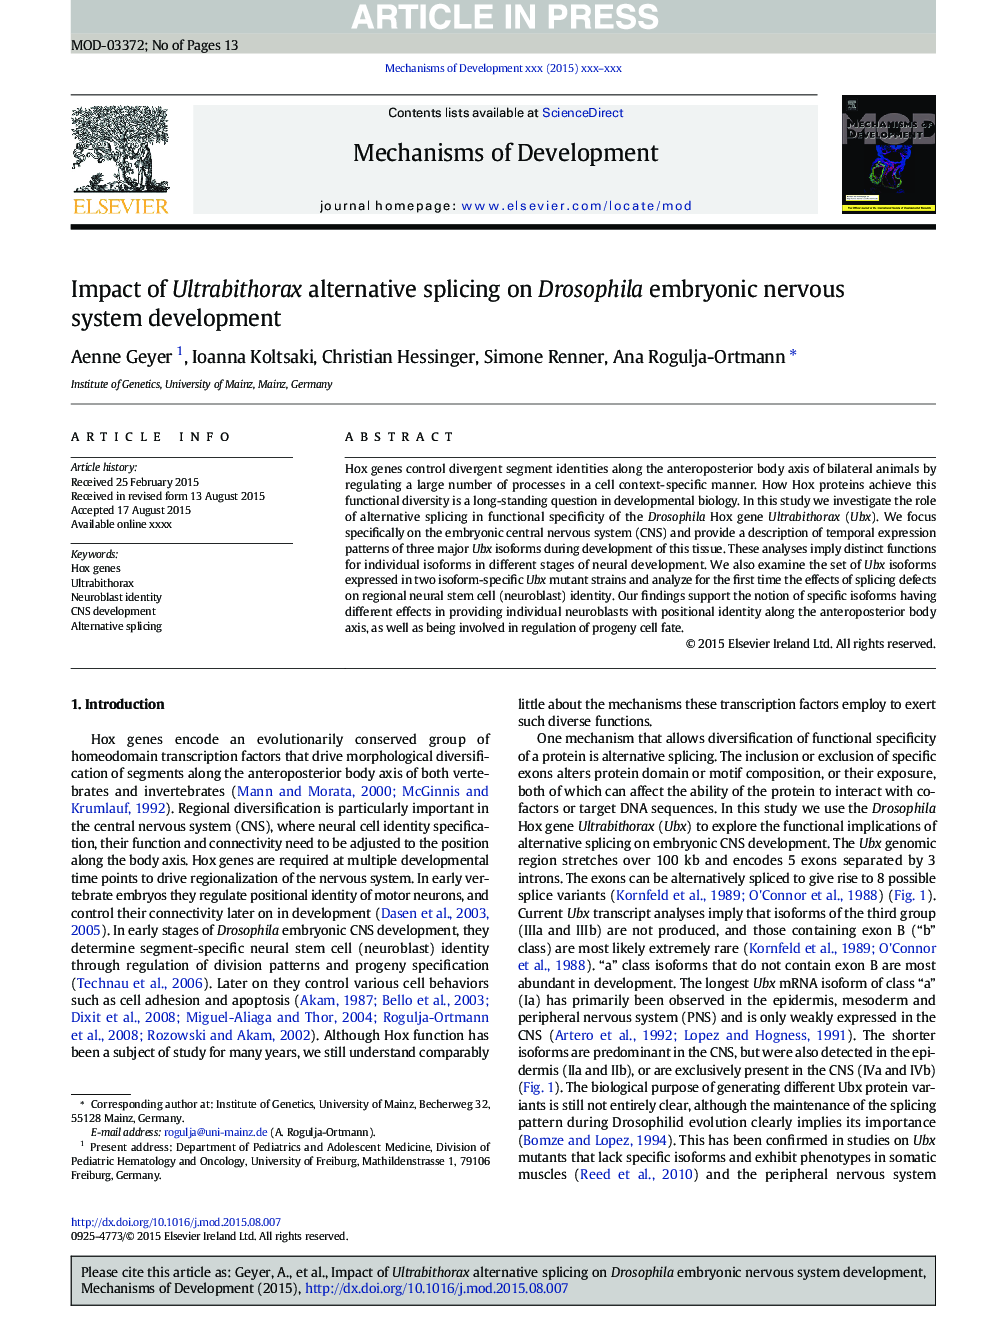 Impact of Ultrabithorax alternative splicing on Drosophila embryonic nervous system development